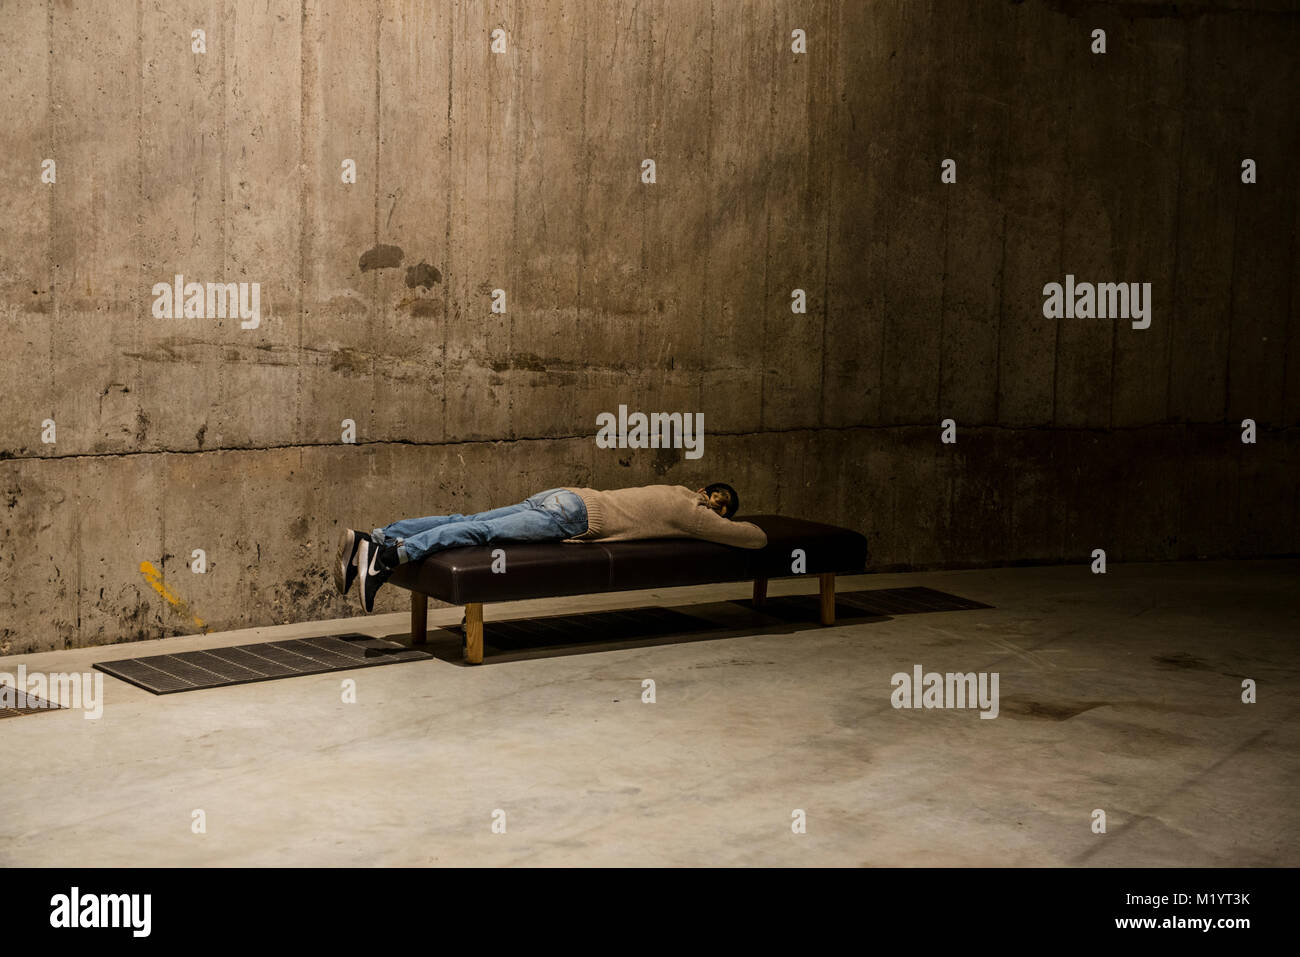 Man lying on bench by concrete wall, Tate Modern, London, England Stock Photo